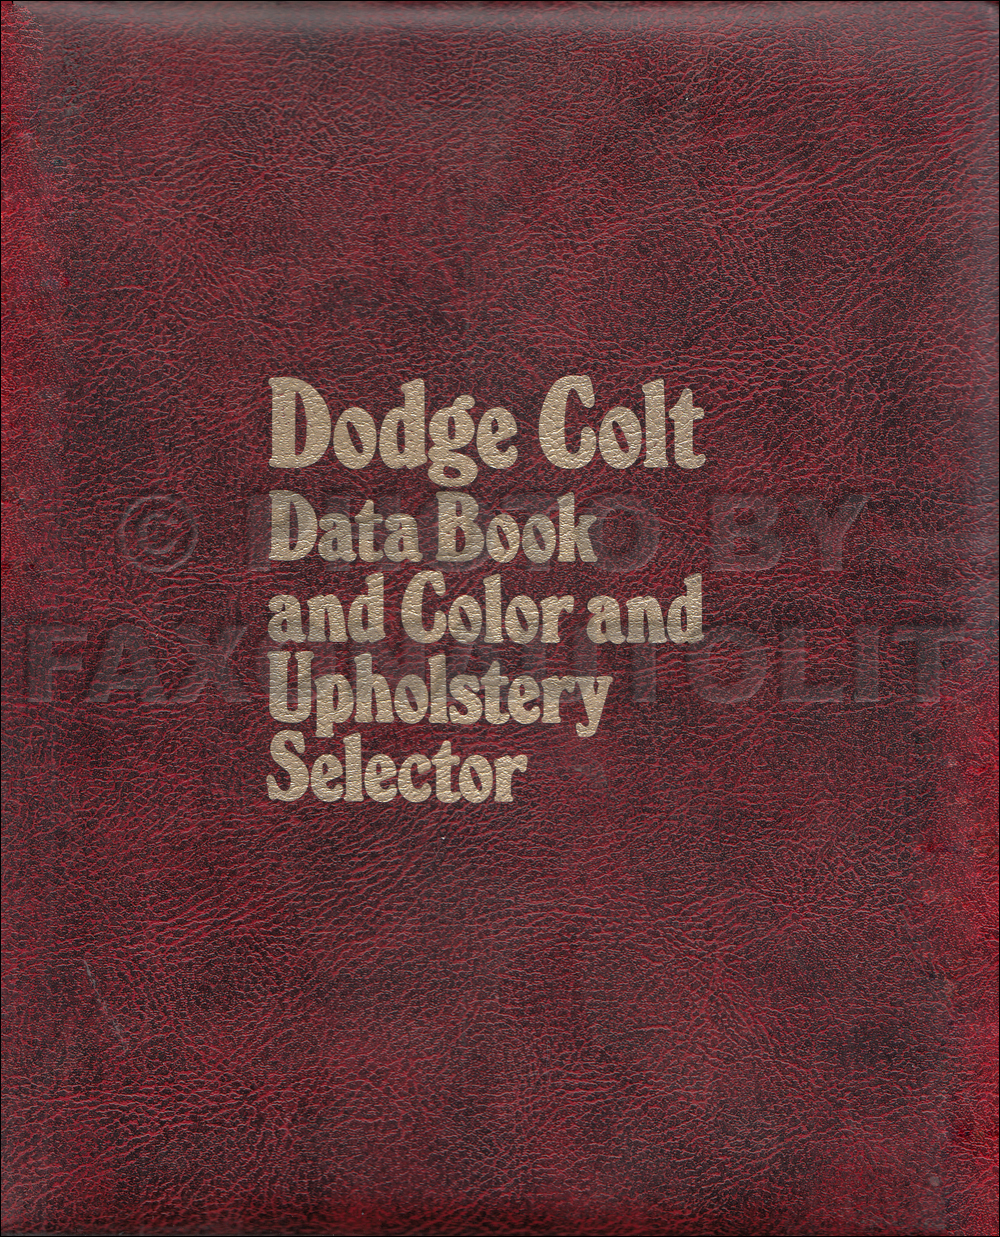 1975 Dodge Colt Color & Upholstery Album and Data Book Original